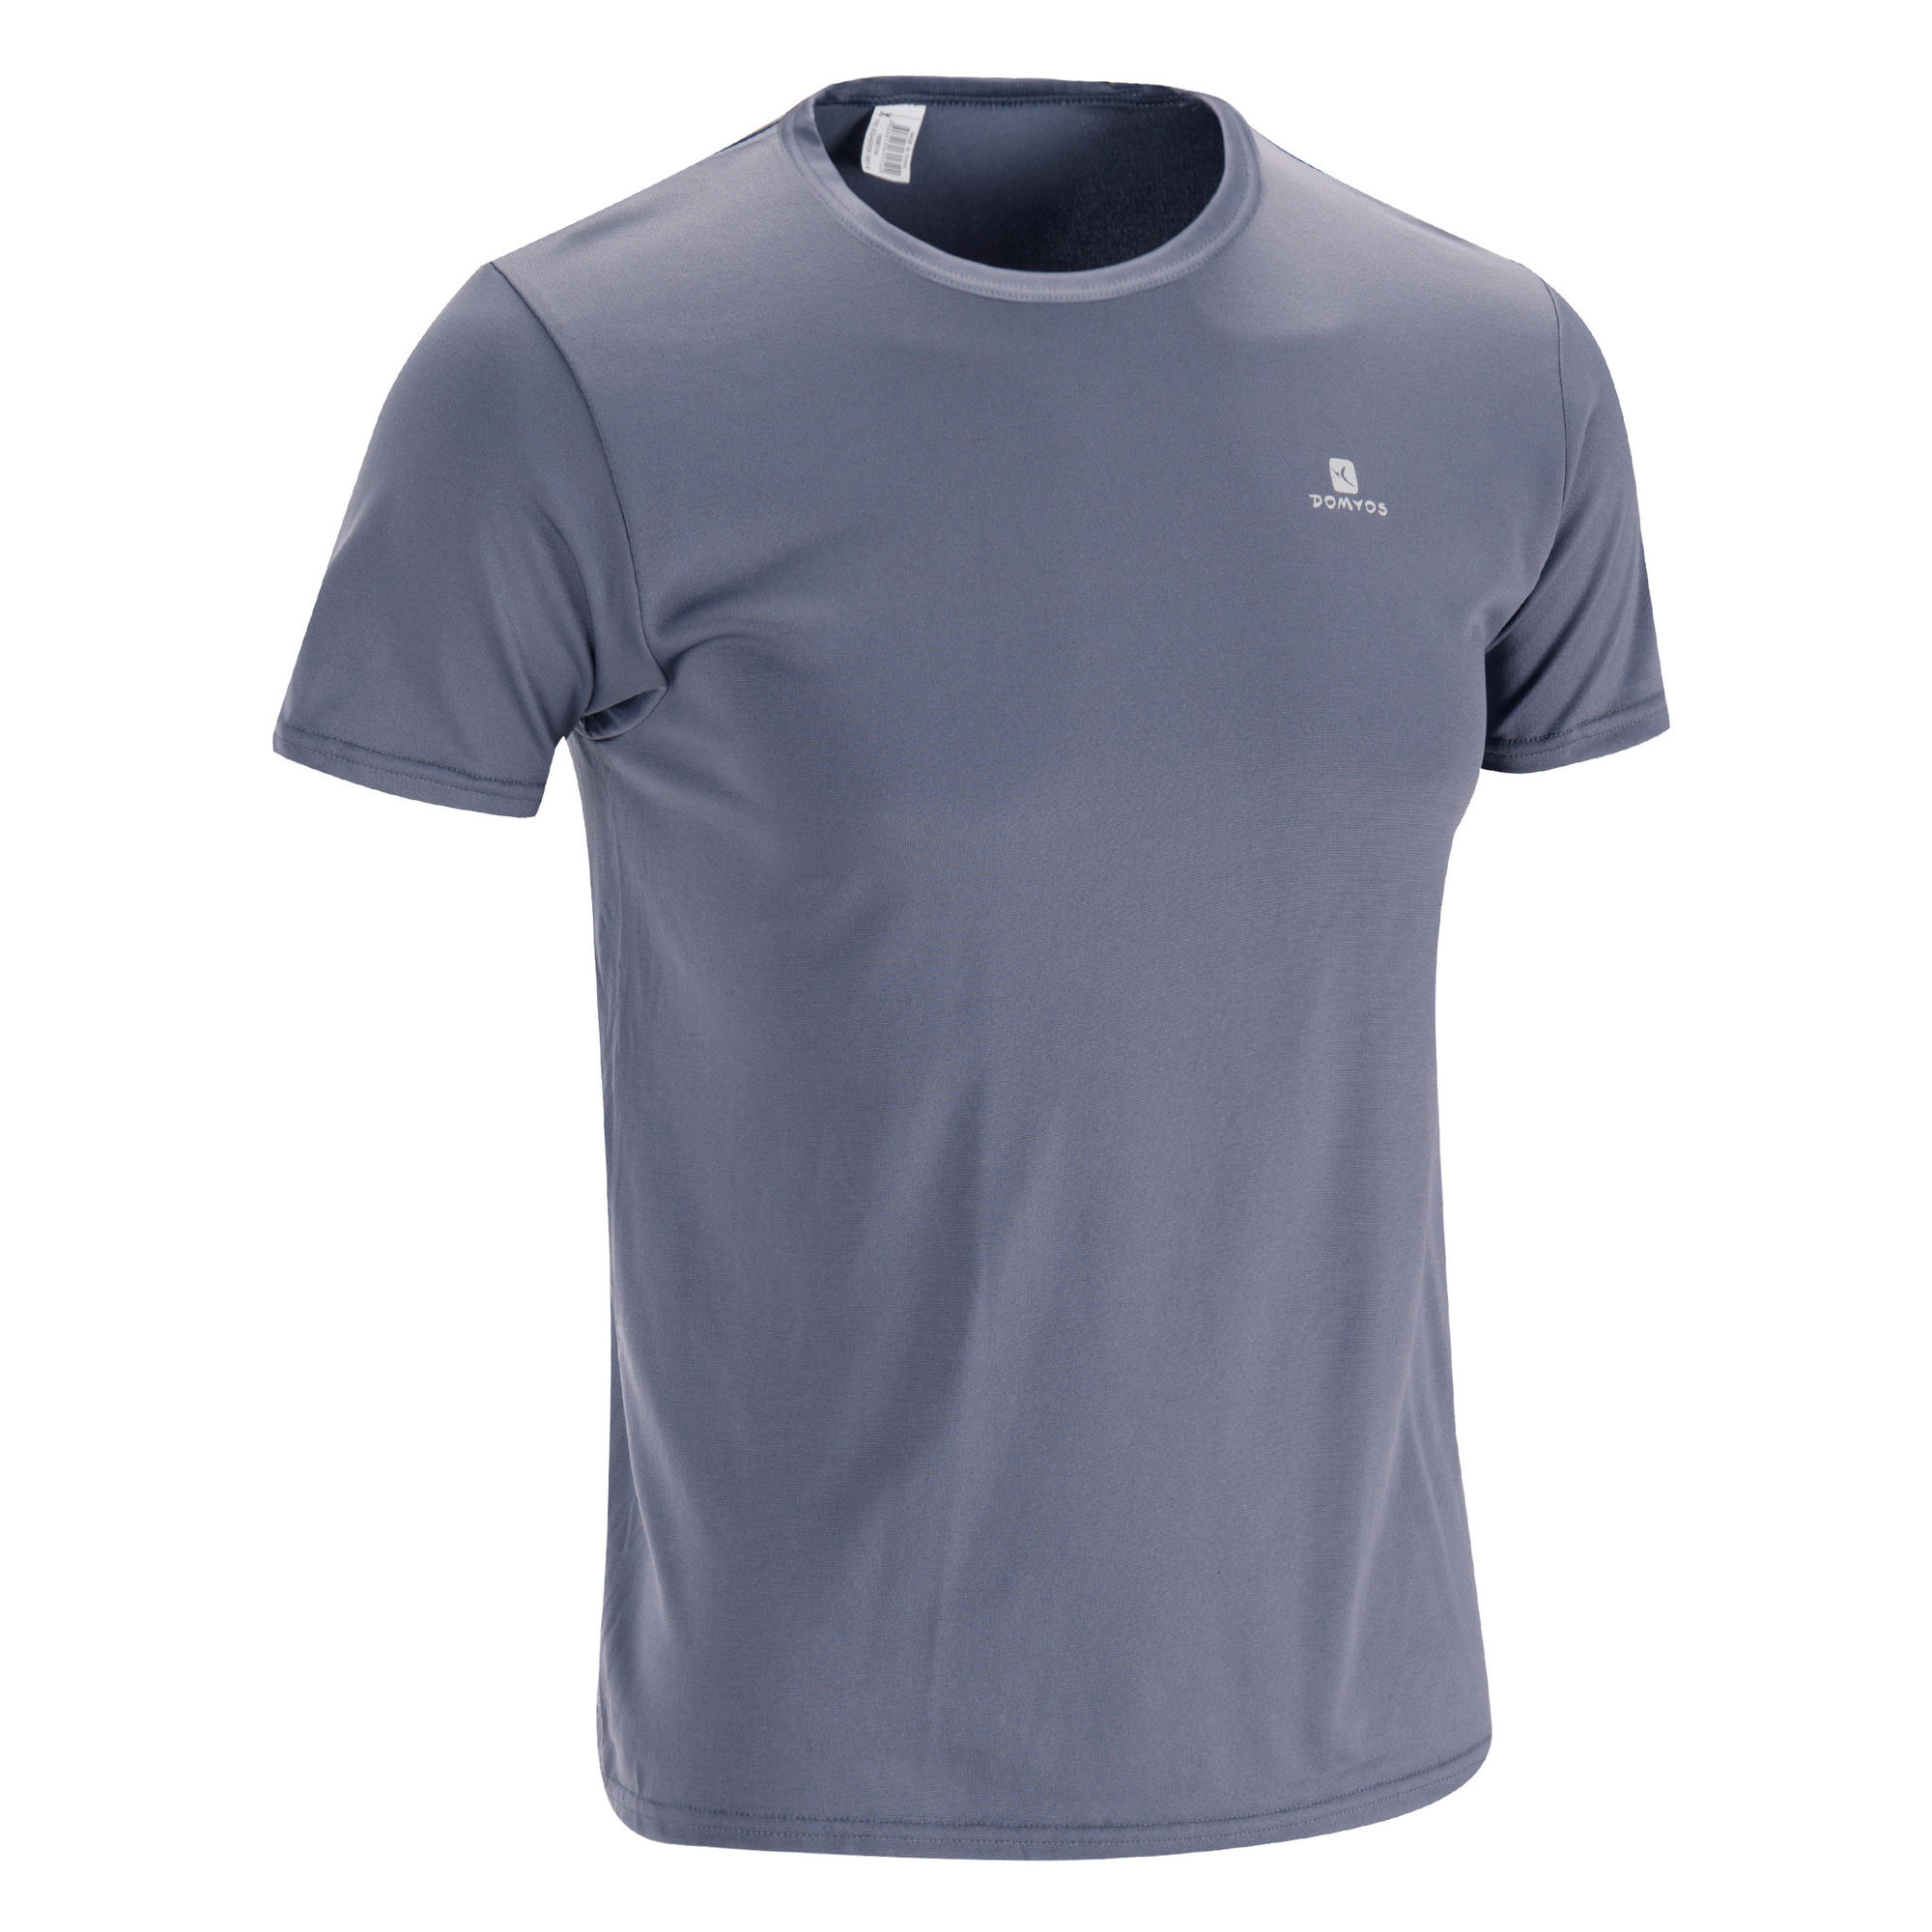 Fitness Cardio T-Shirt - Grey | Domyos 